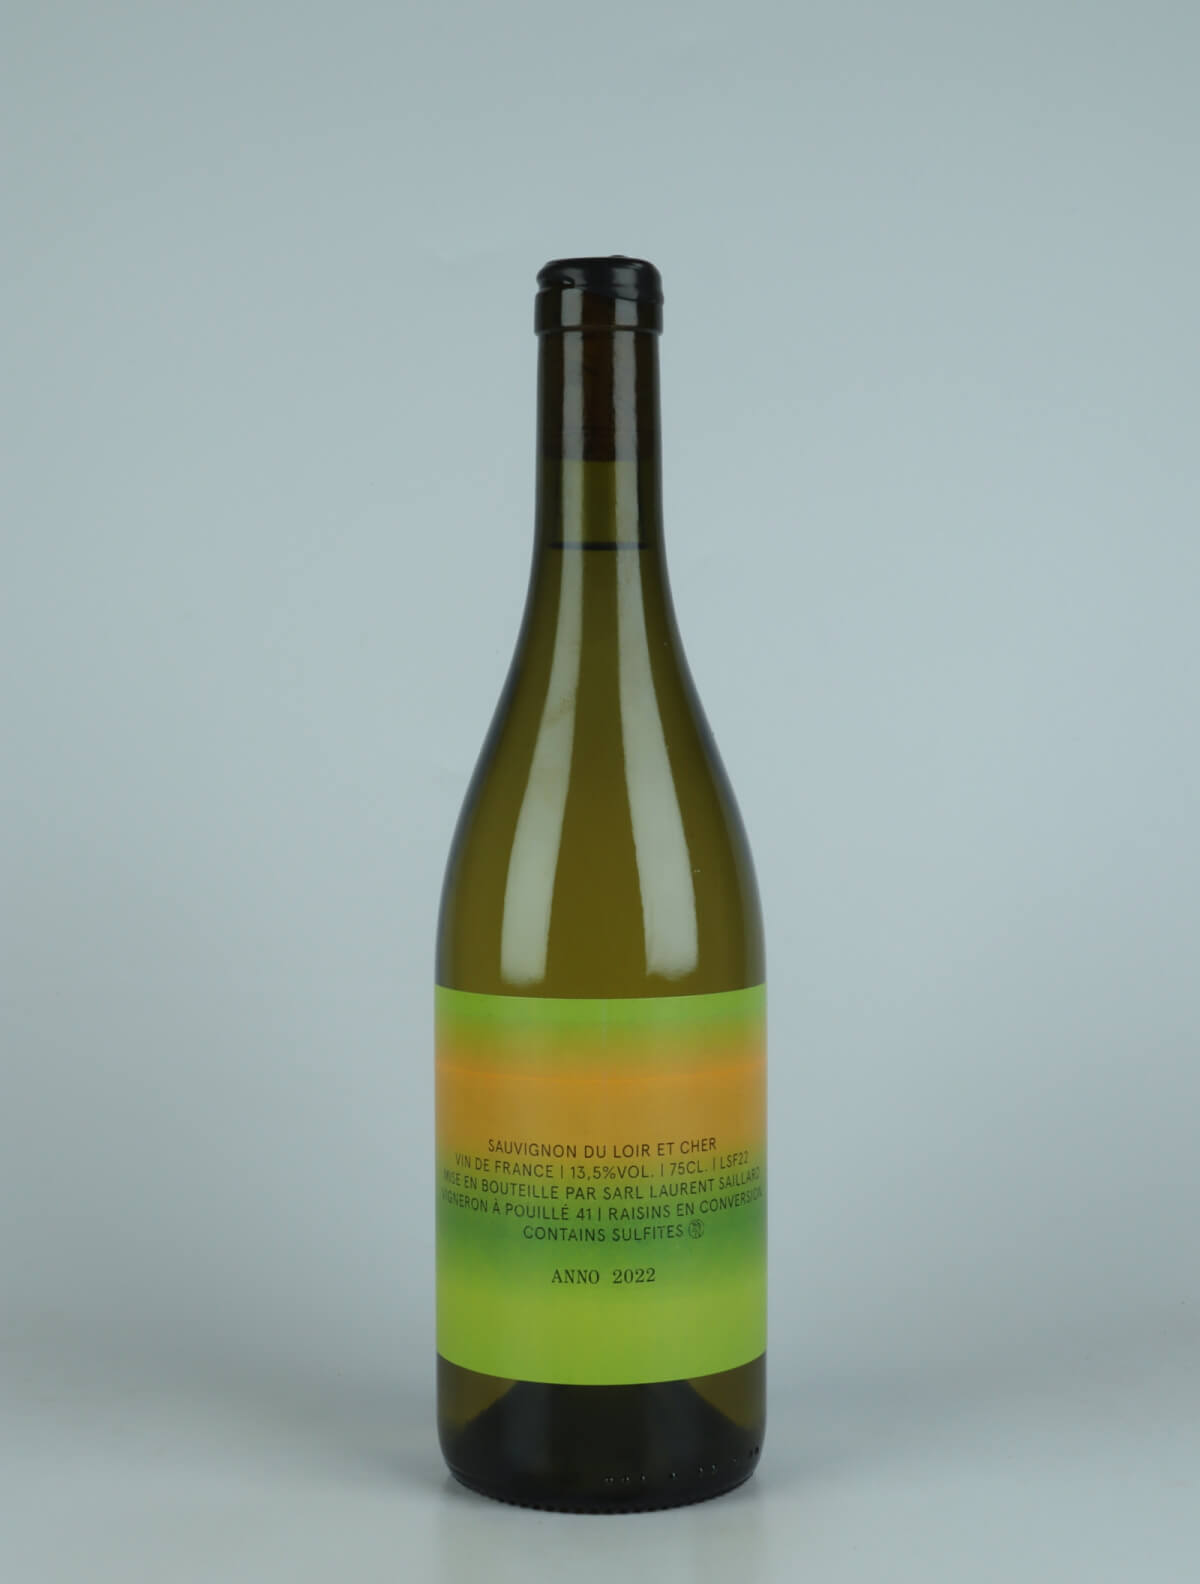 A bottle 2022 Sauvignon du Loir & Cher White wine from Laurent Saillard, Loire in France